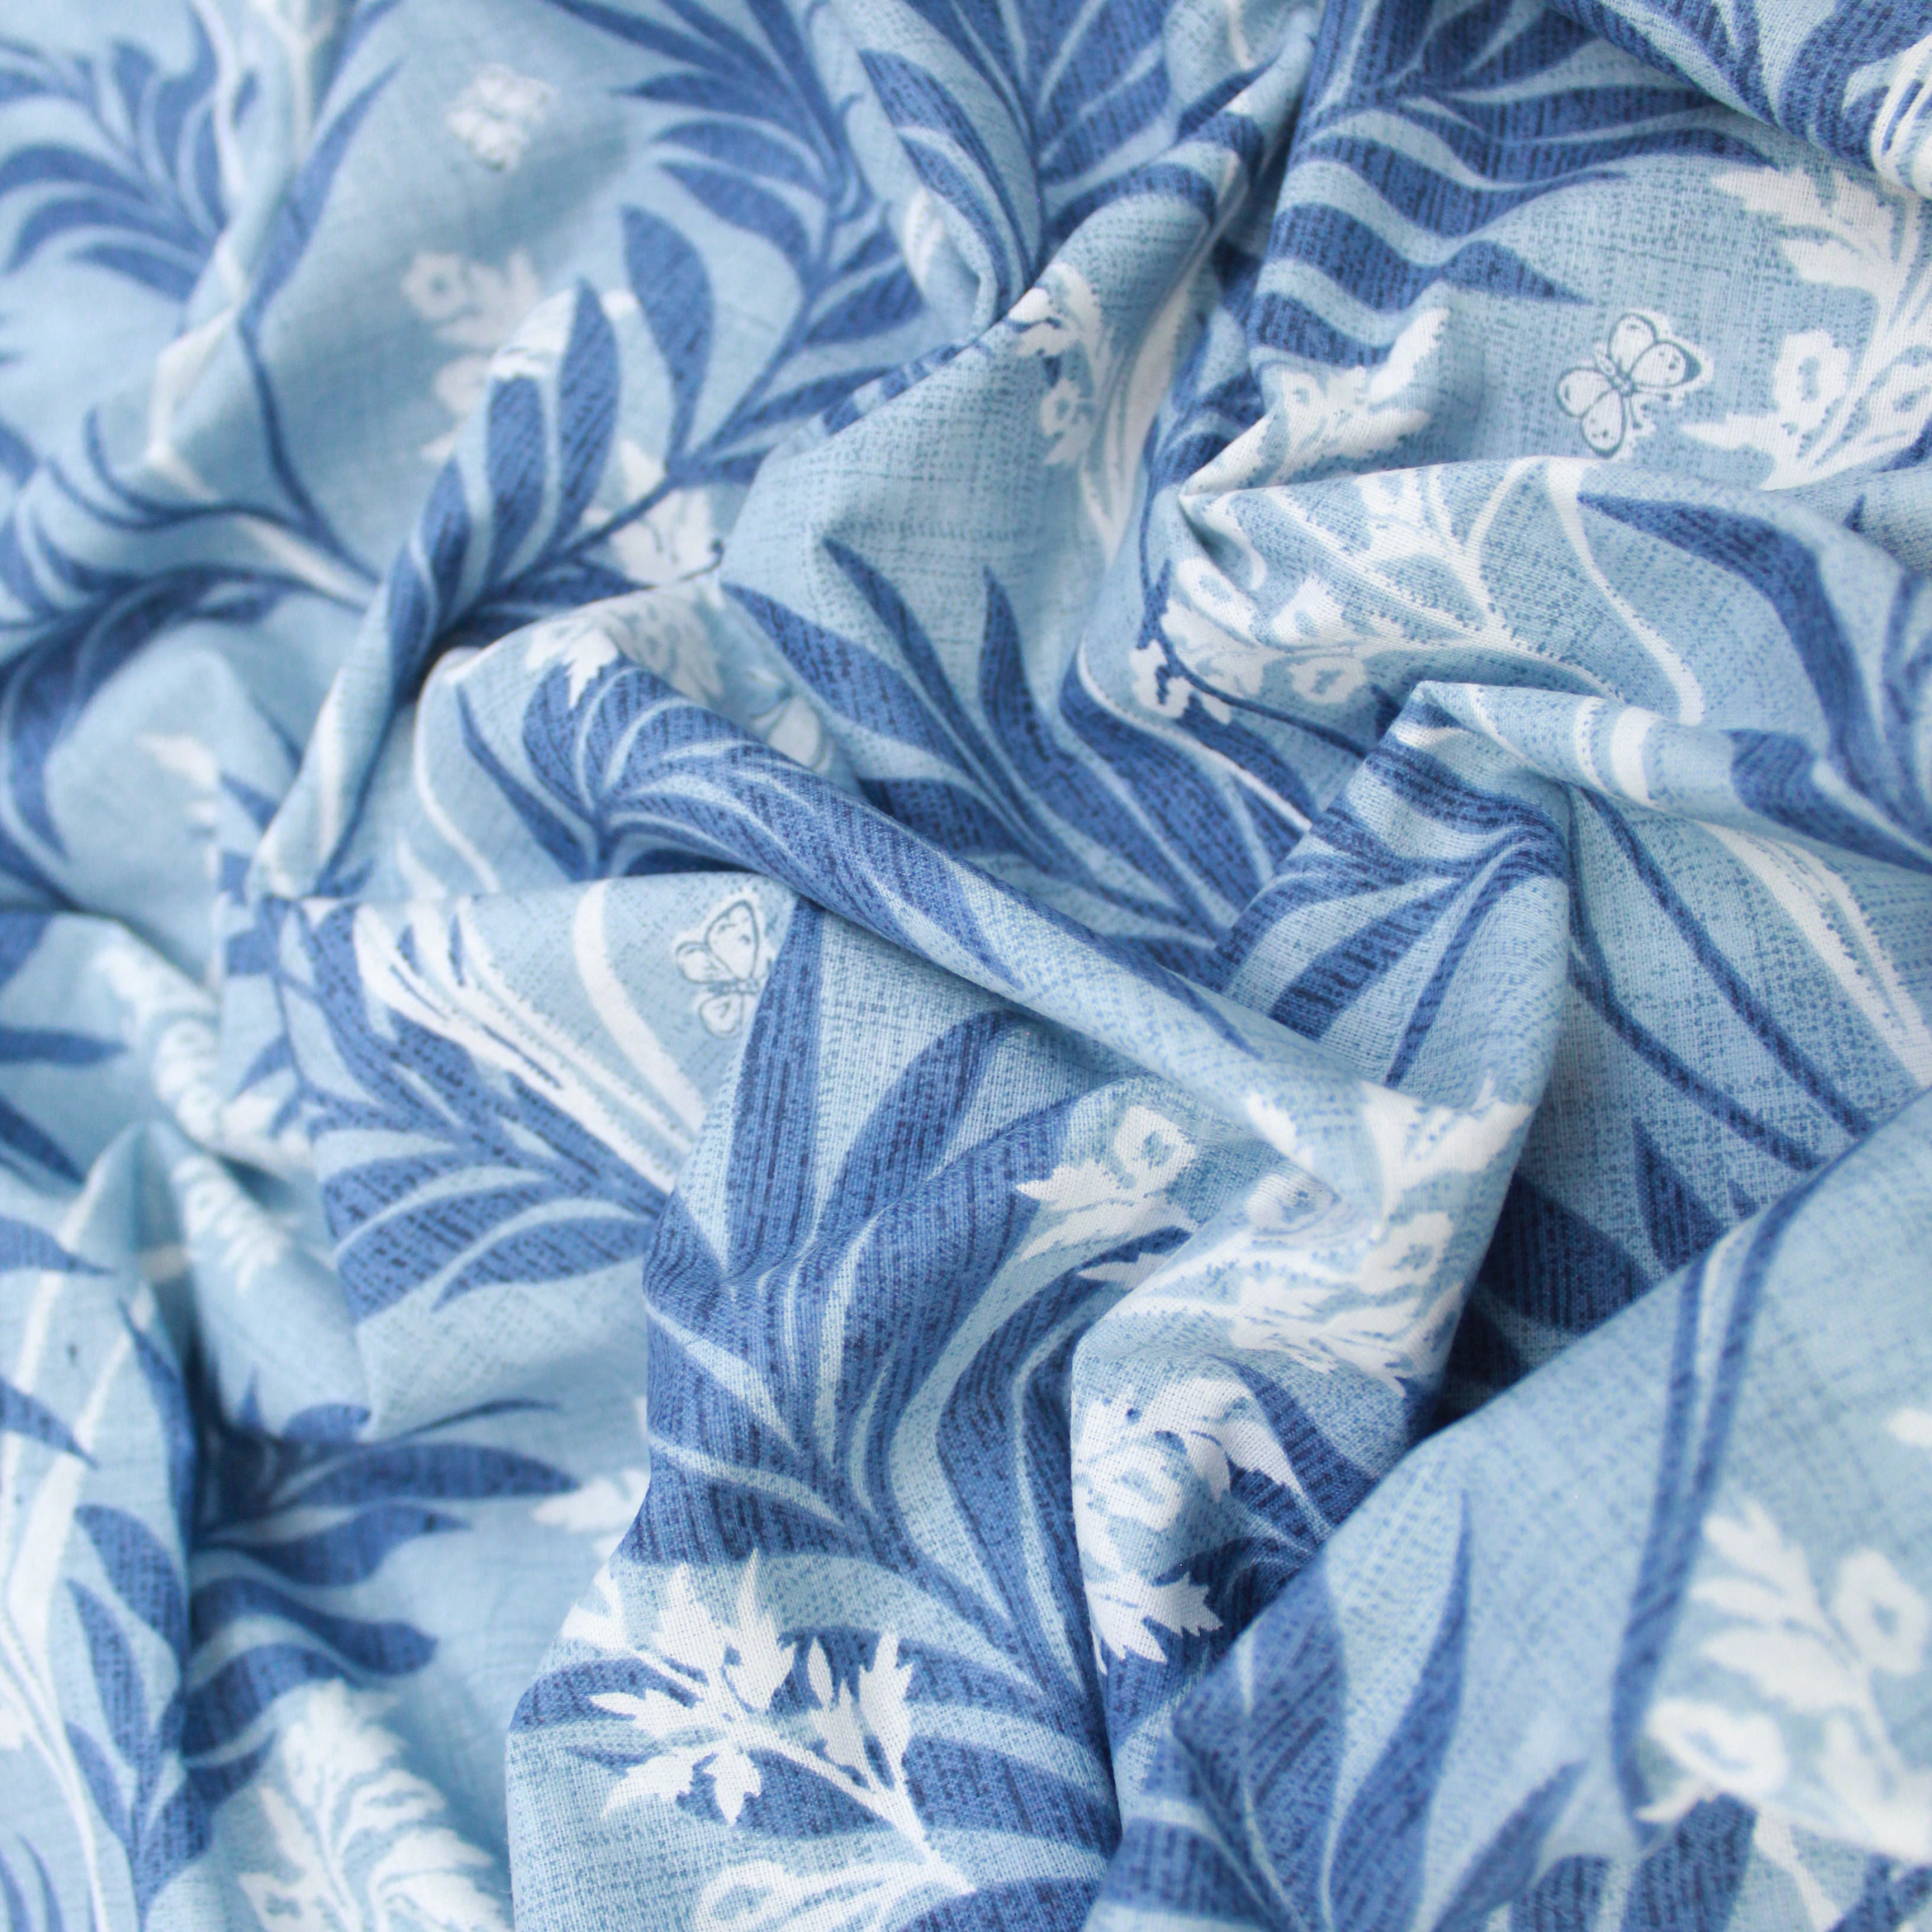 Premium Quality Super Wide Cotton Blend Sheeting "Leaf's" 94" Wide Blue